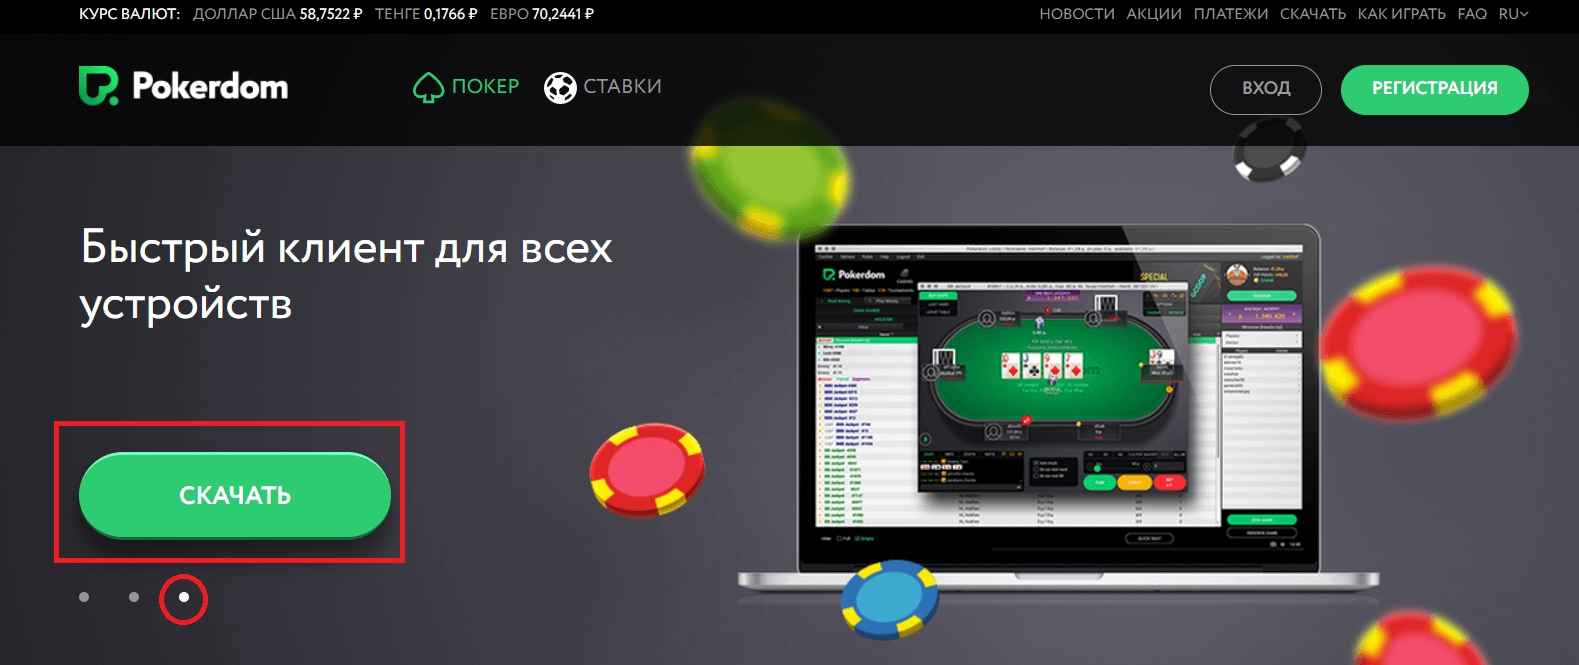 pokerdom casino play online